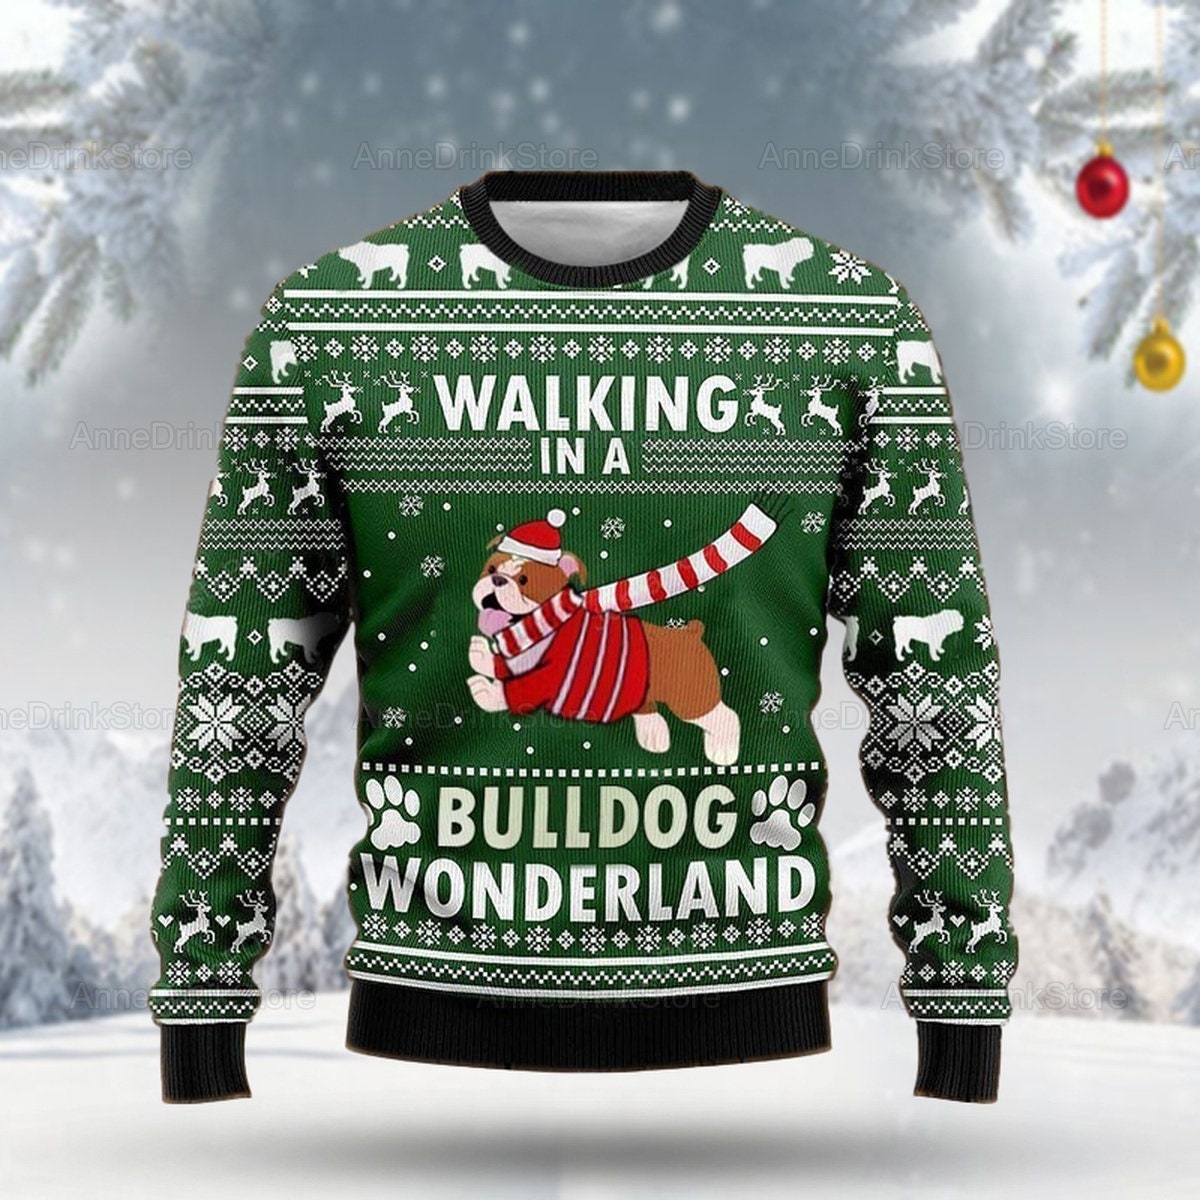 Bulldog In A Wonderland - Ugly Sweater